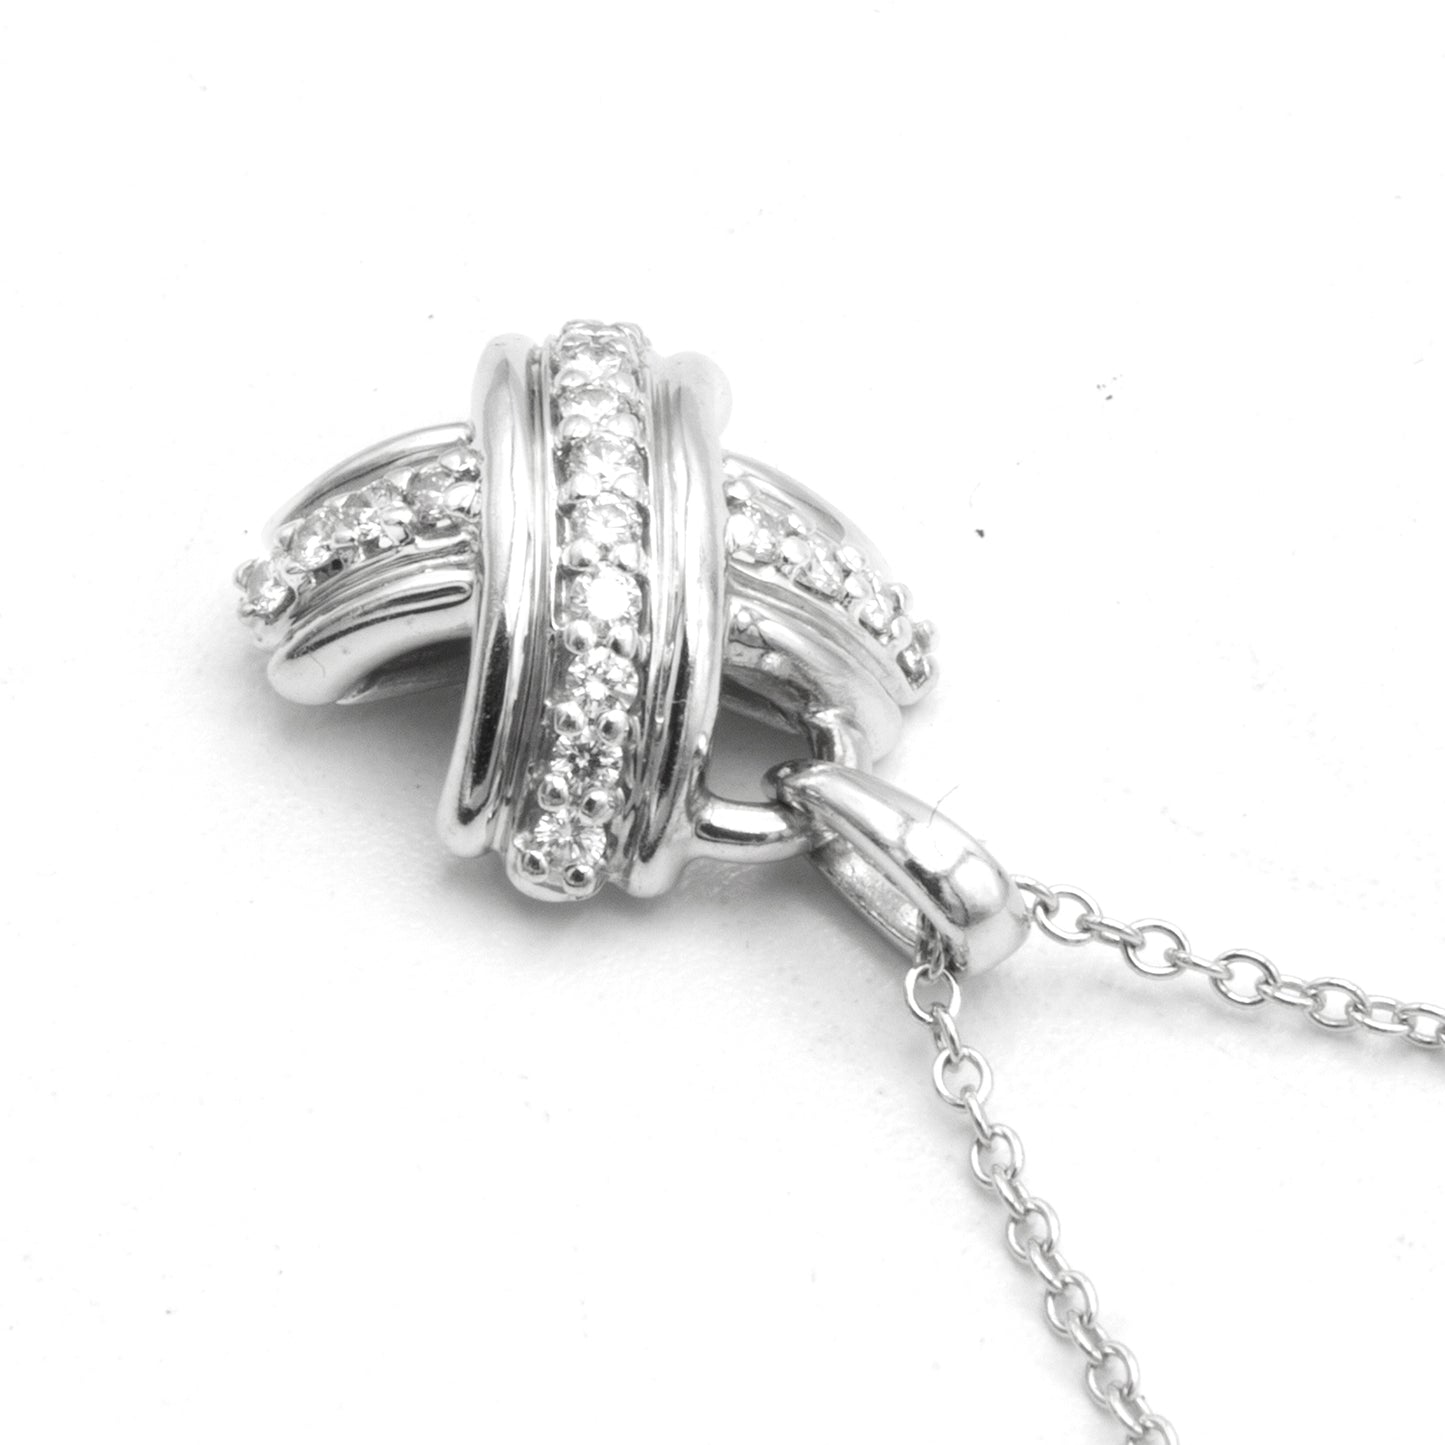 Tiffany & Co Signature necklace